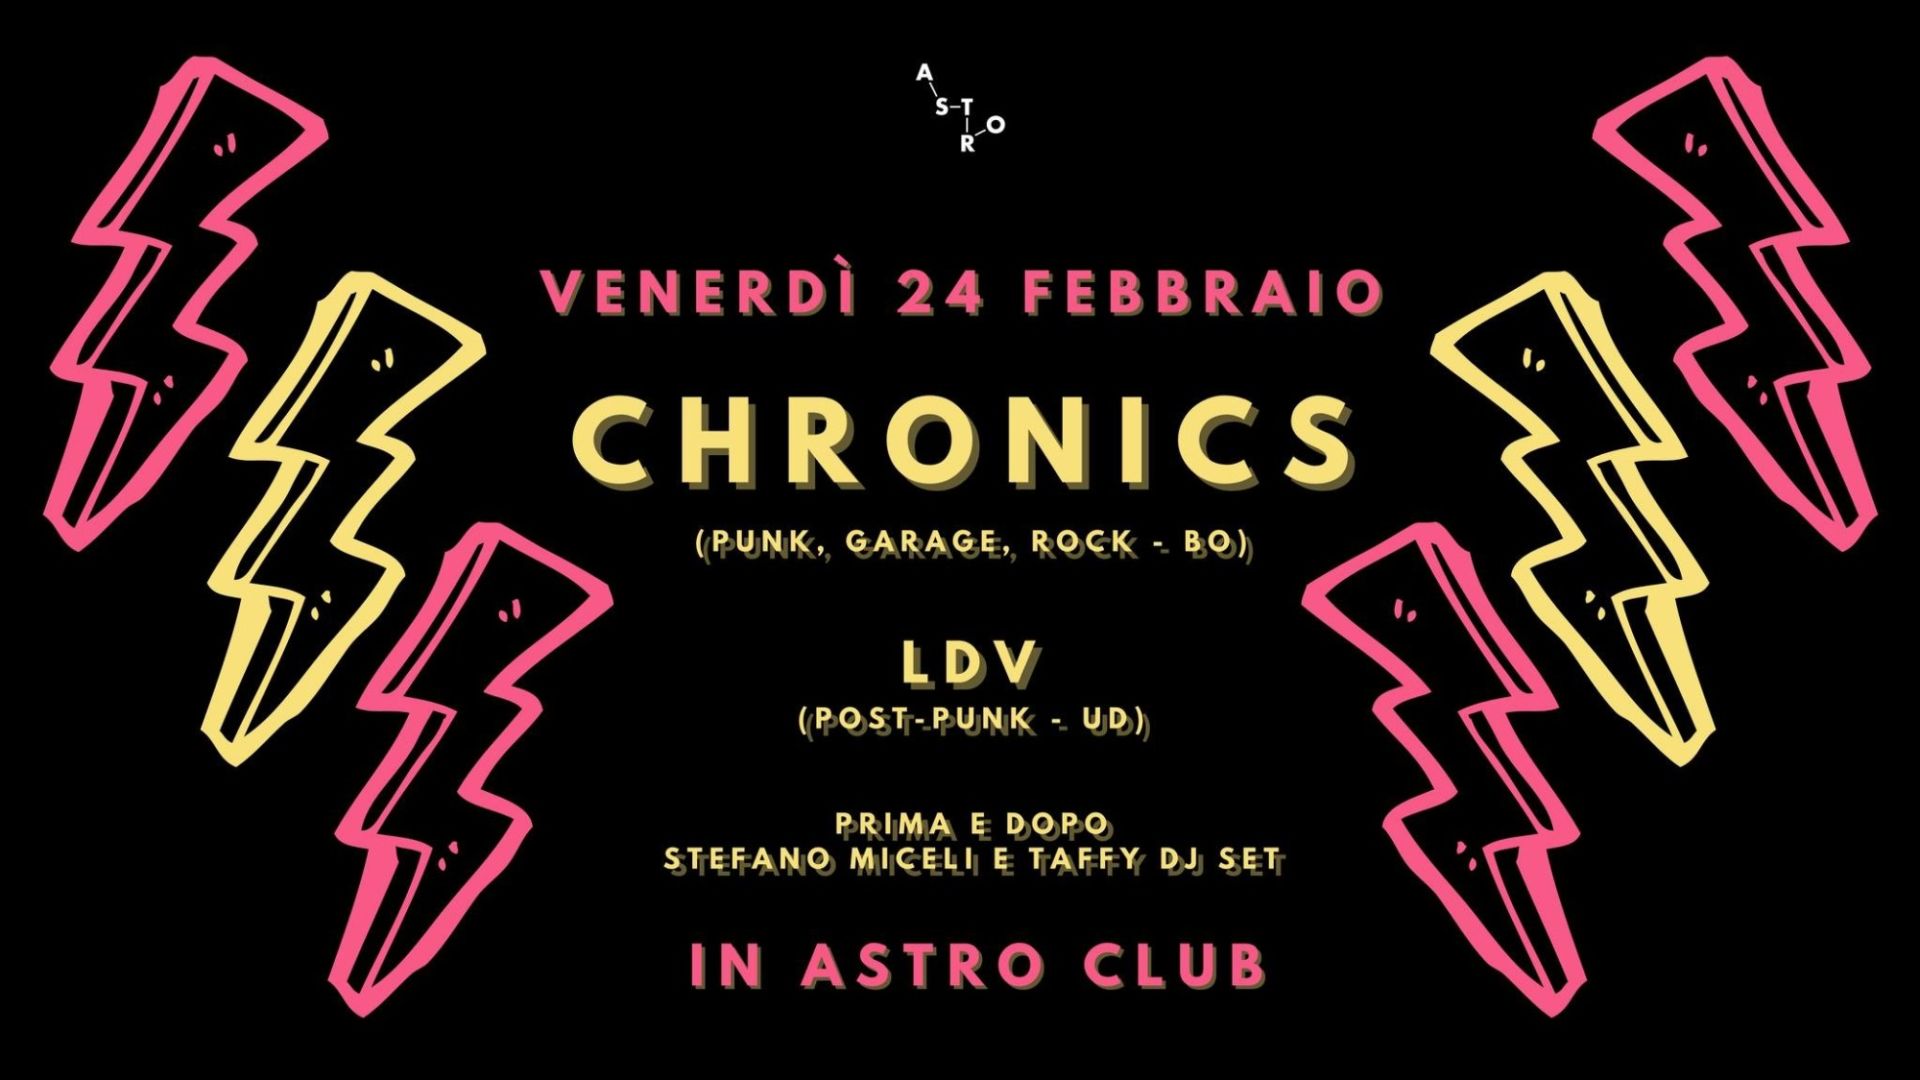 Chronics (punk, garage - Bo) + Ldv (post-punk - Ud) + S.miceli & Taffy dj set